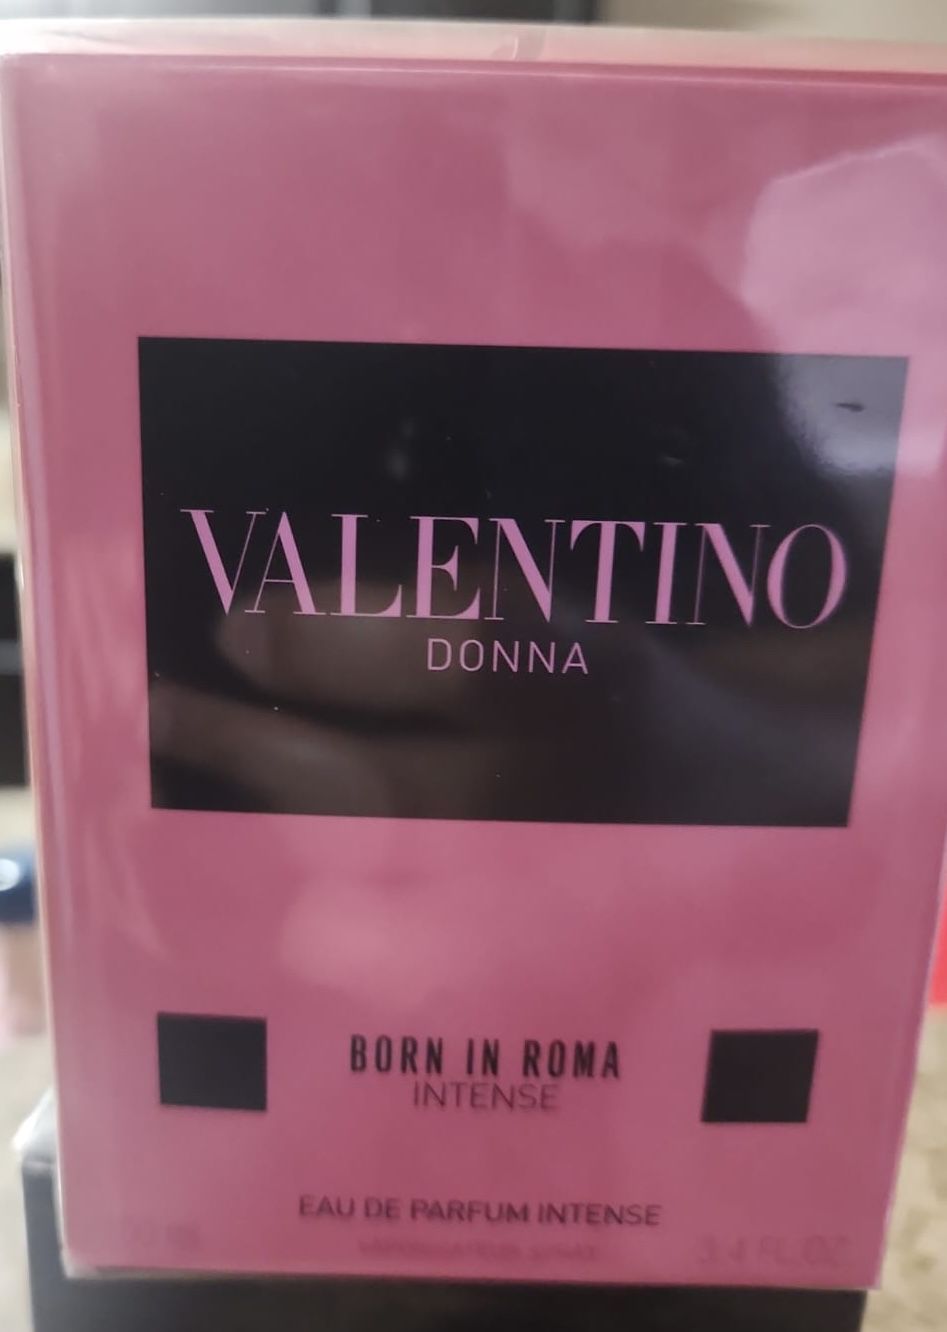 Valentino perfume and cologne